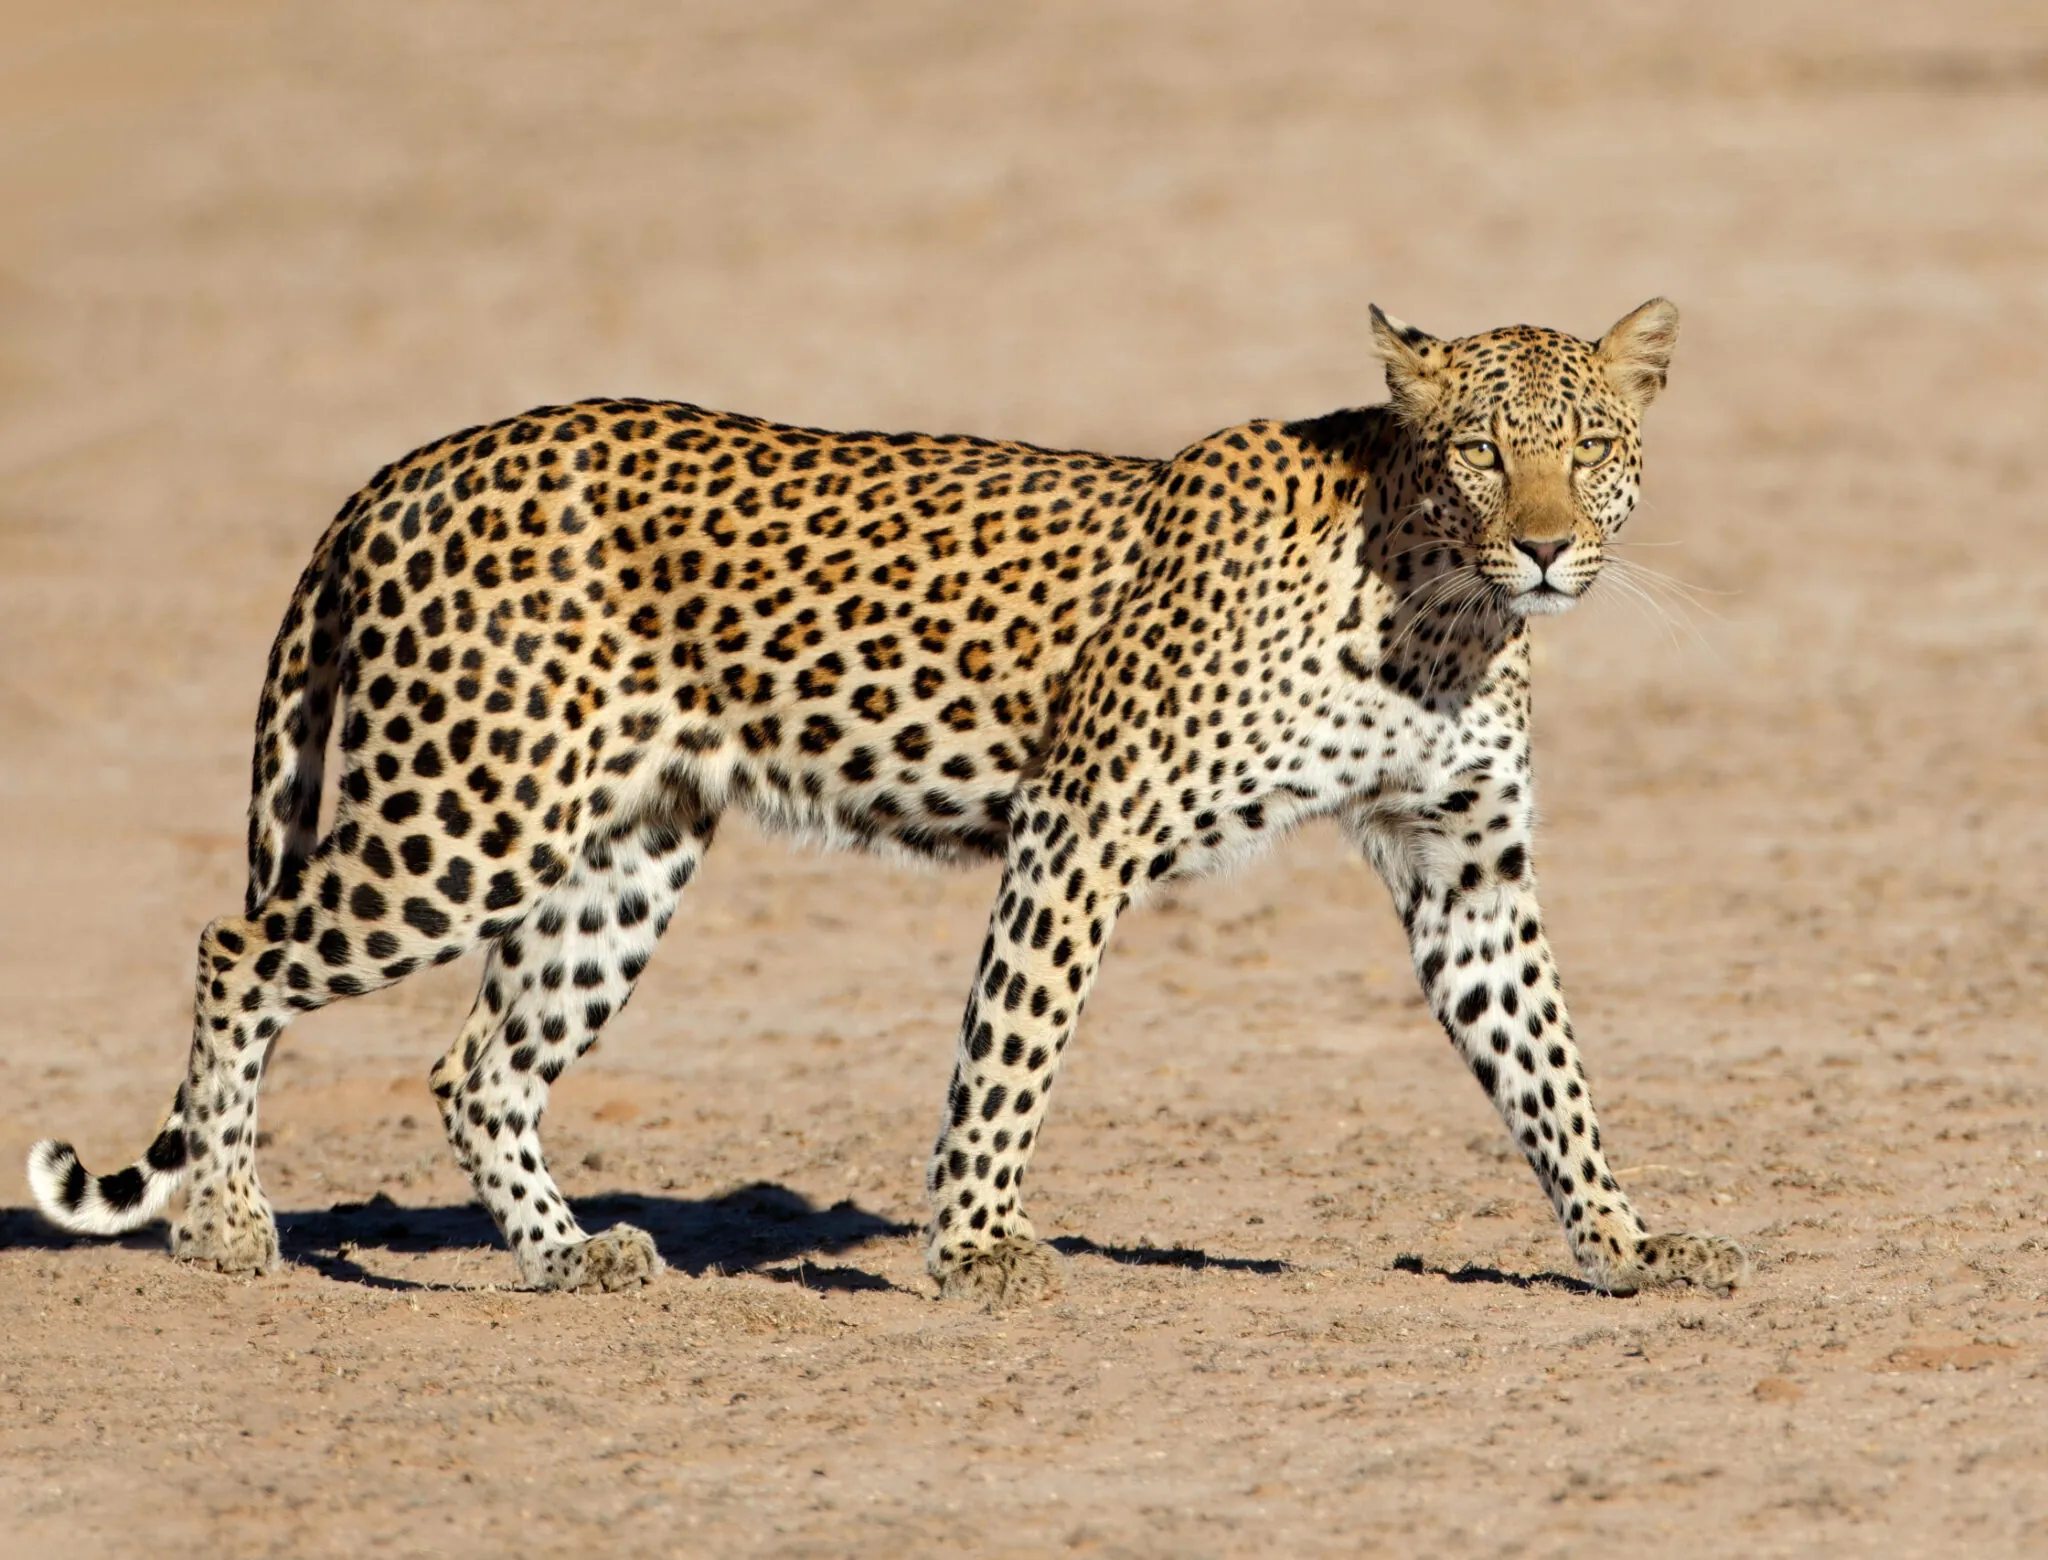 A leopard (Panthera pardus) walking, Kalahari desert, South Africa. Zoo Trips